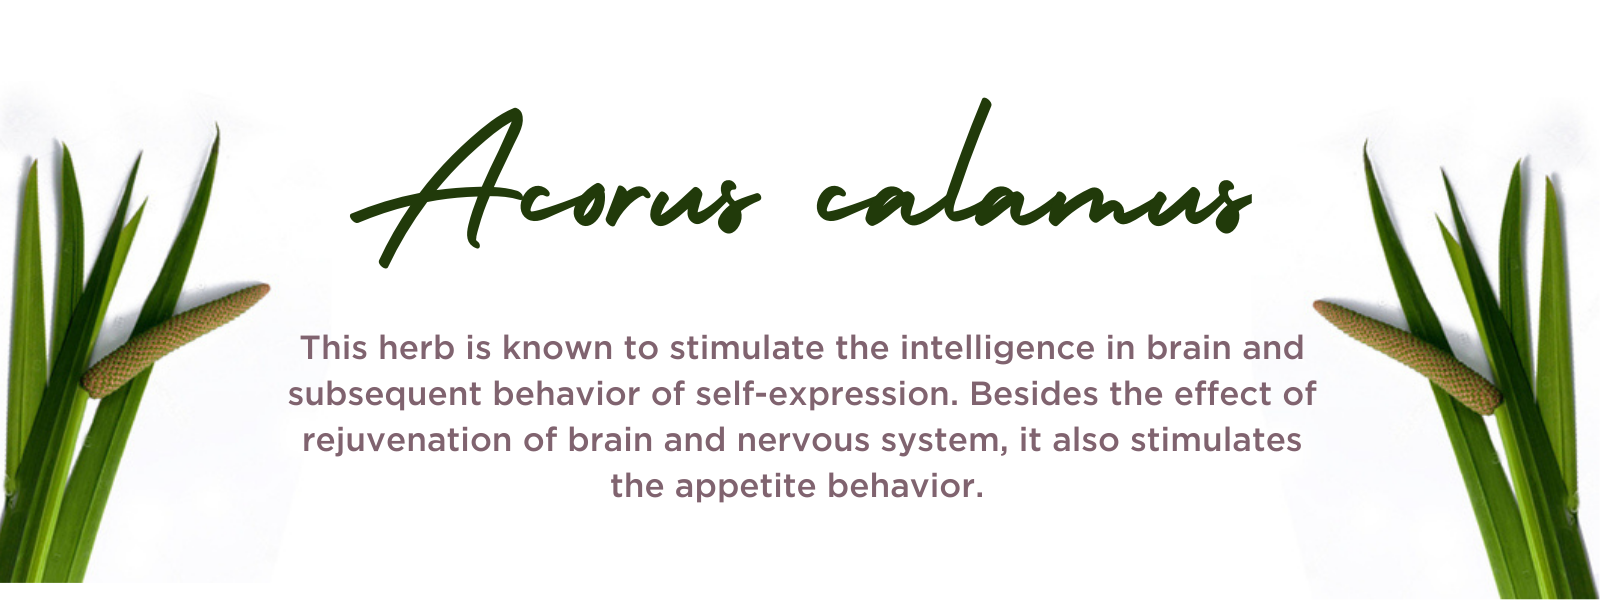 Acorus calamus- Health Benefits, Uses and Important Facts